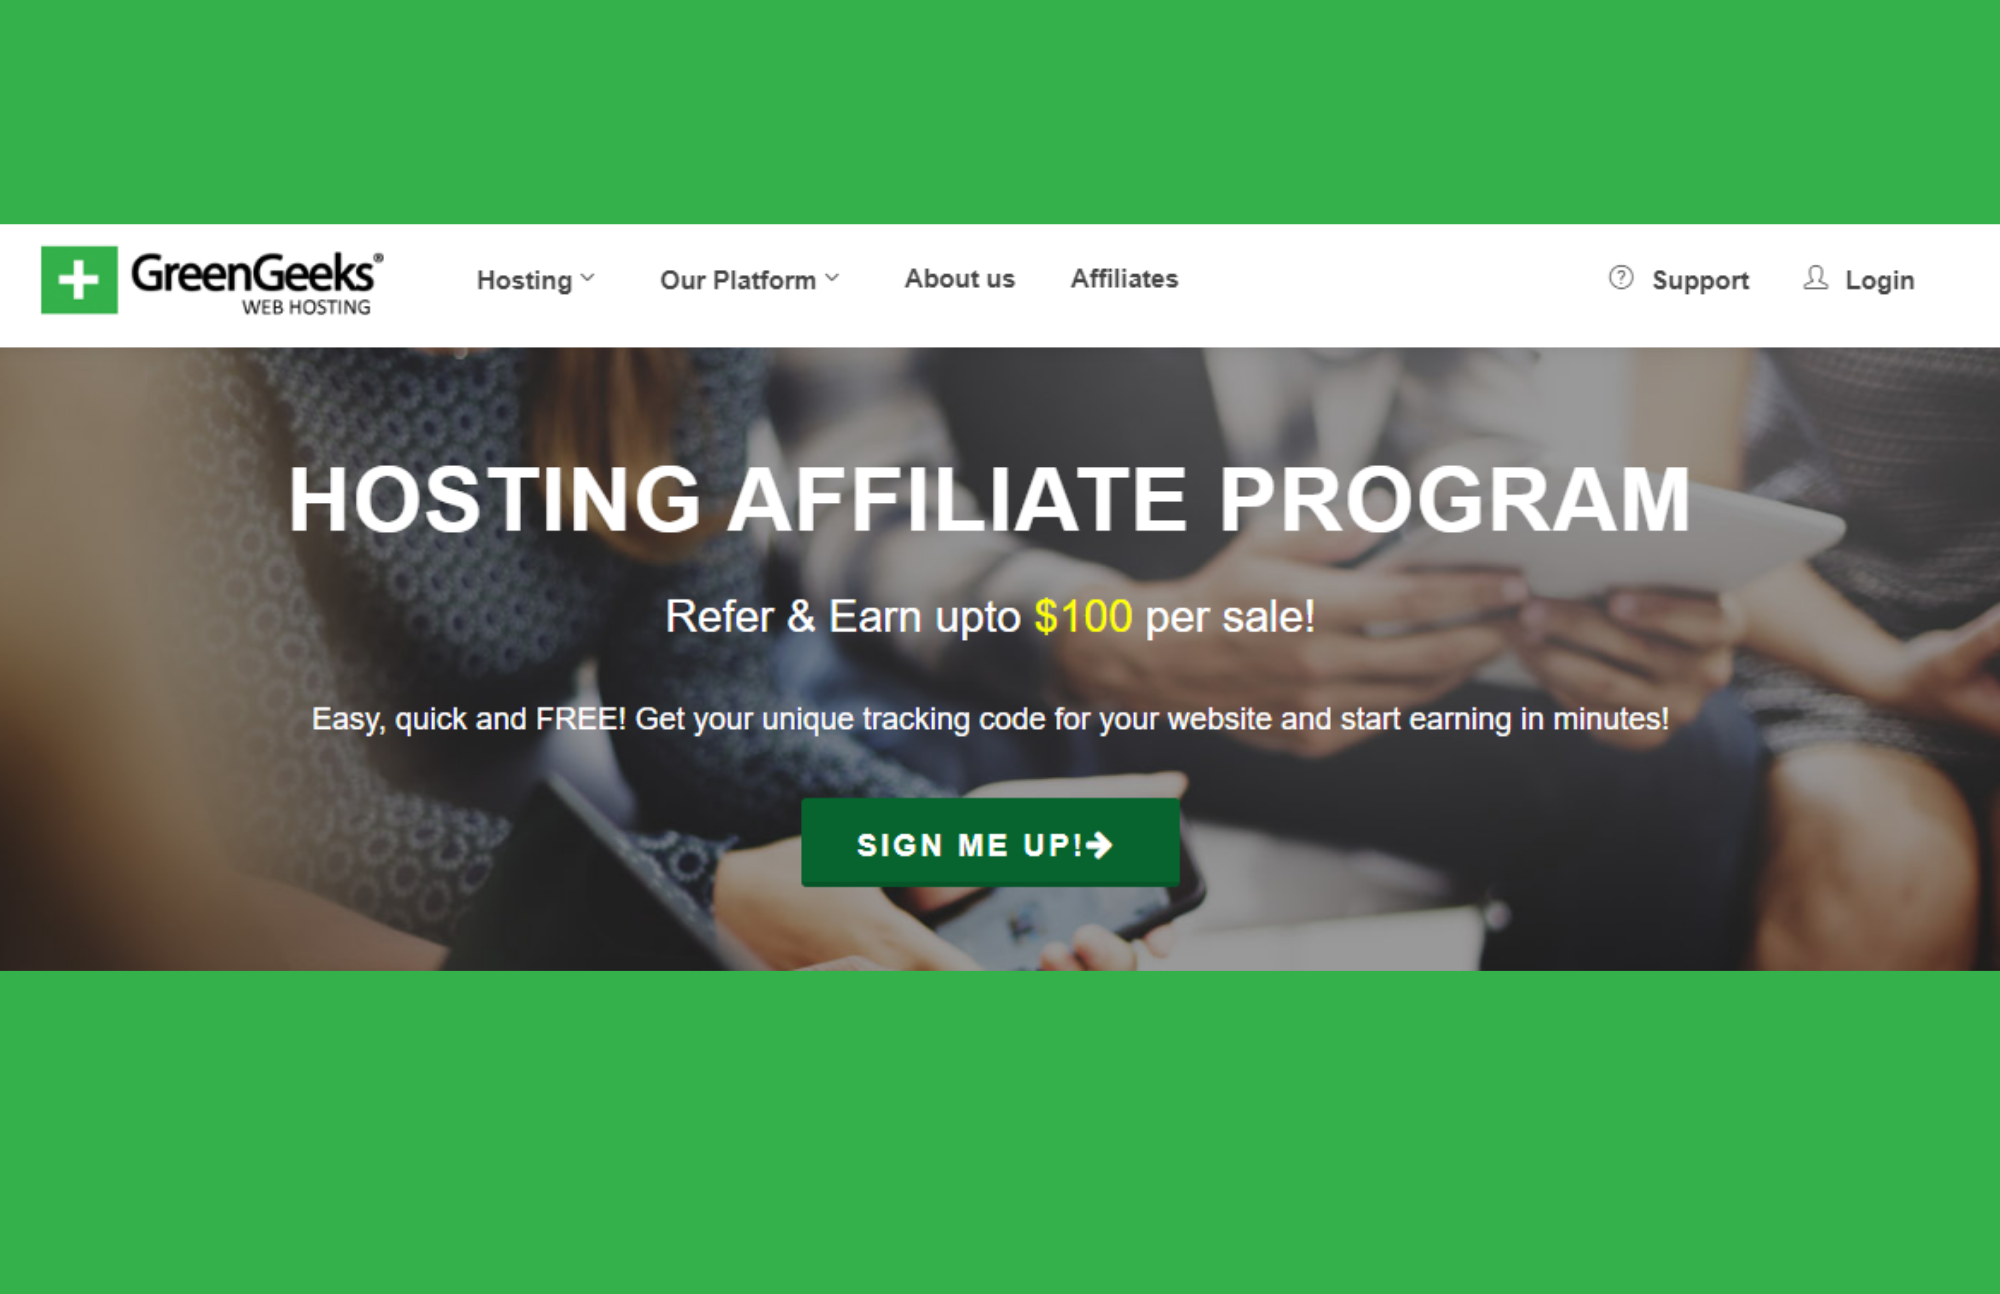 The affiliate program in GreenGeeks website